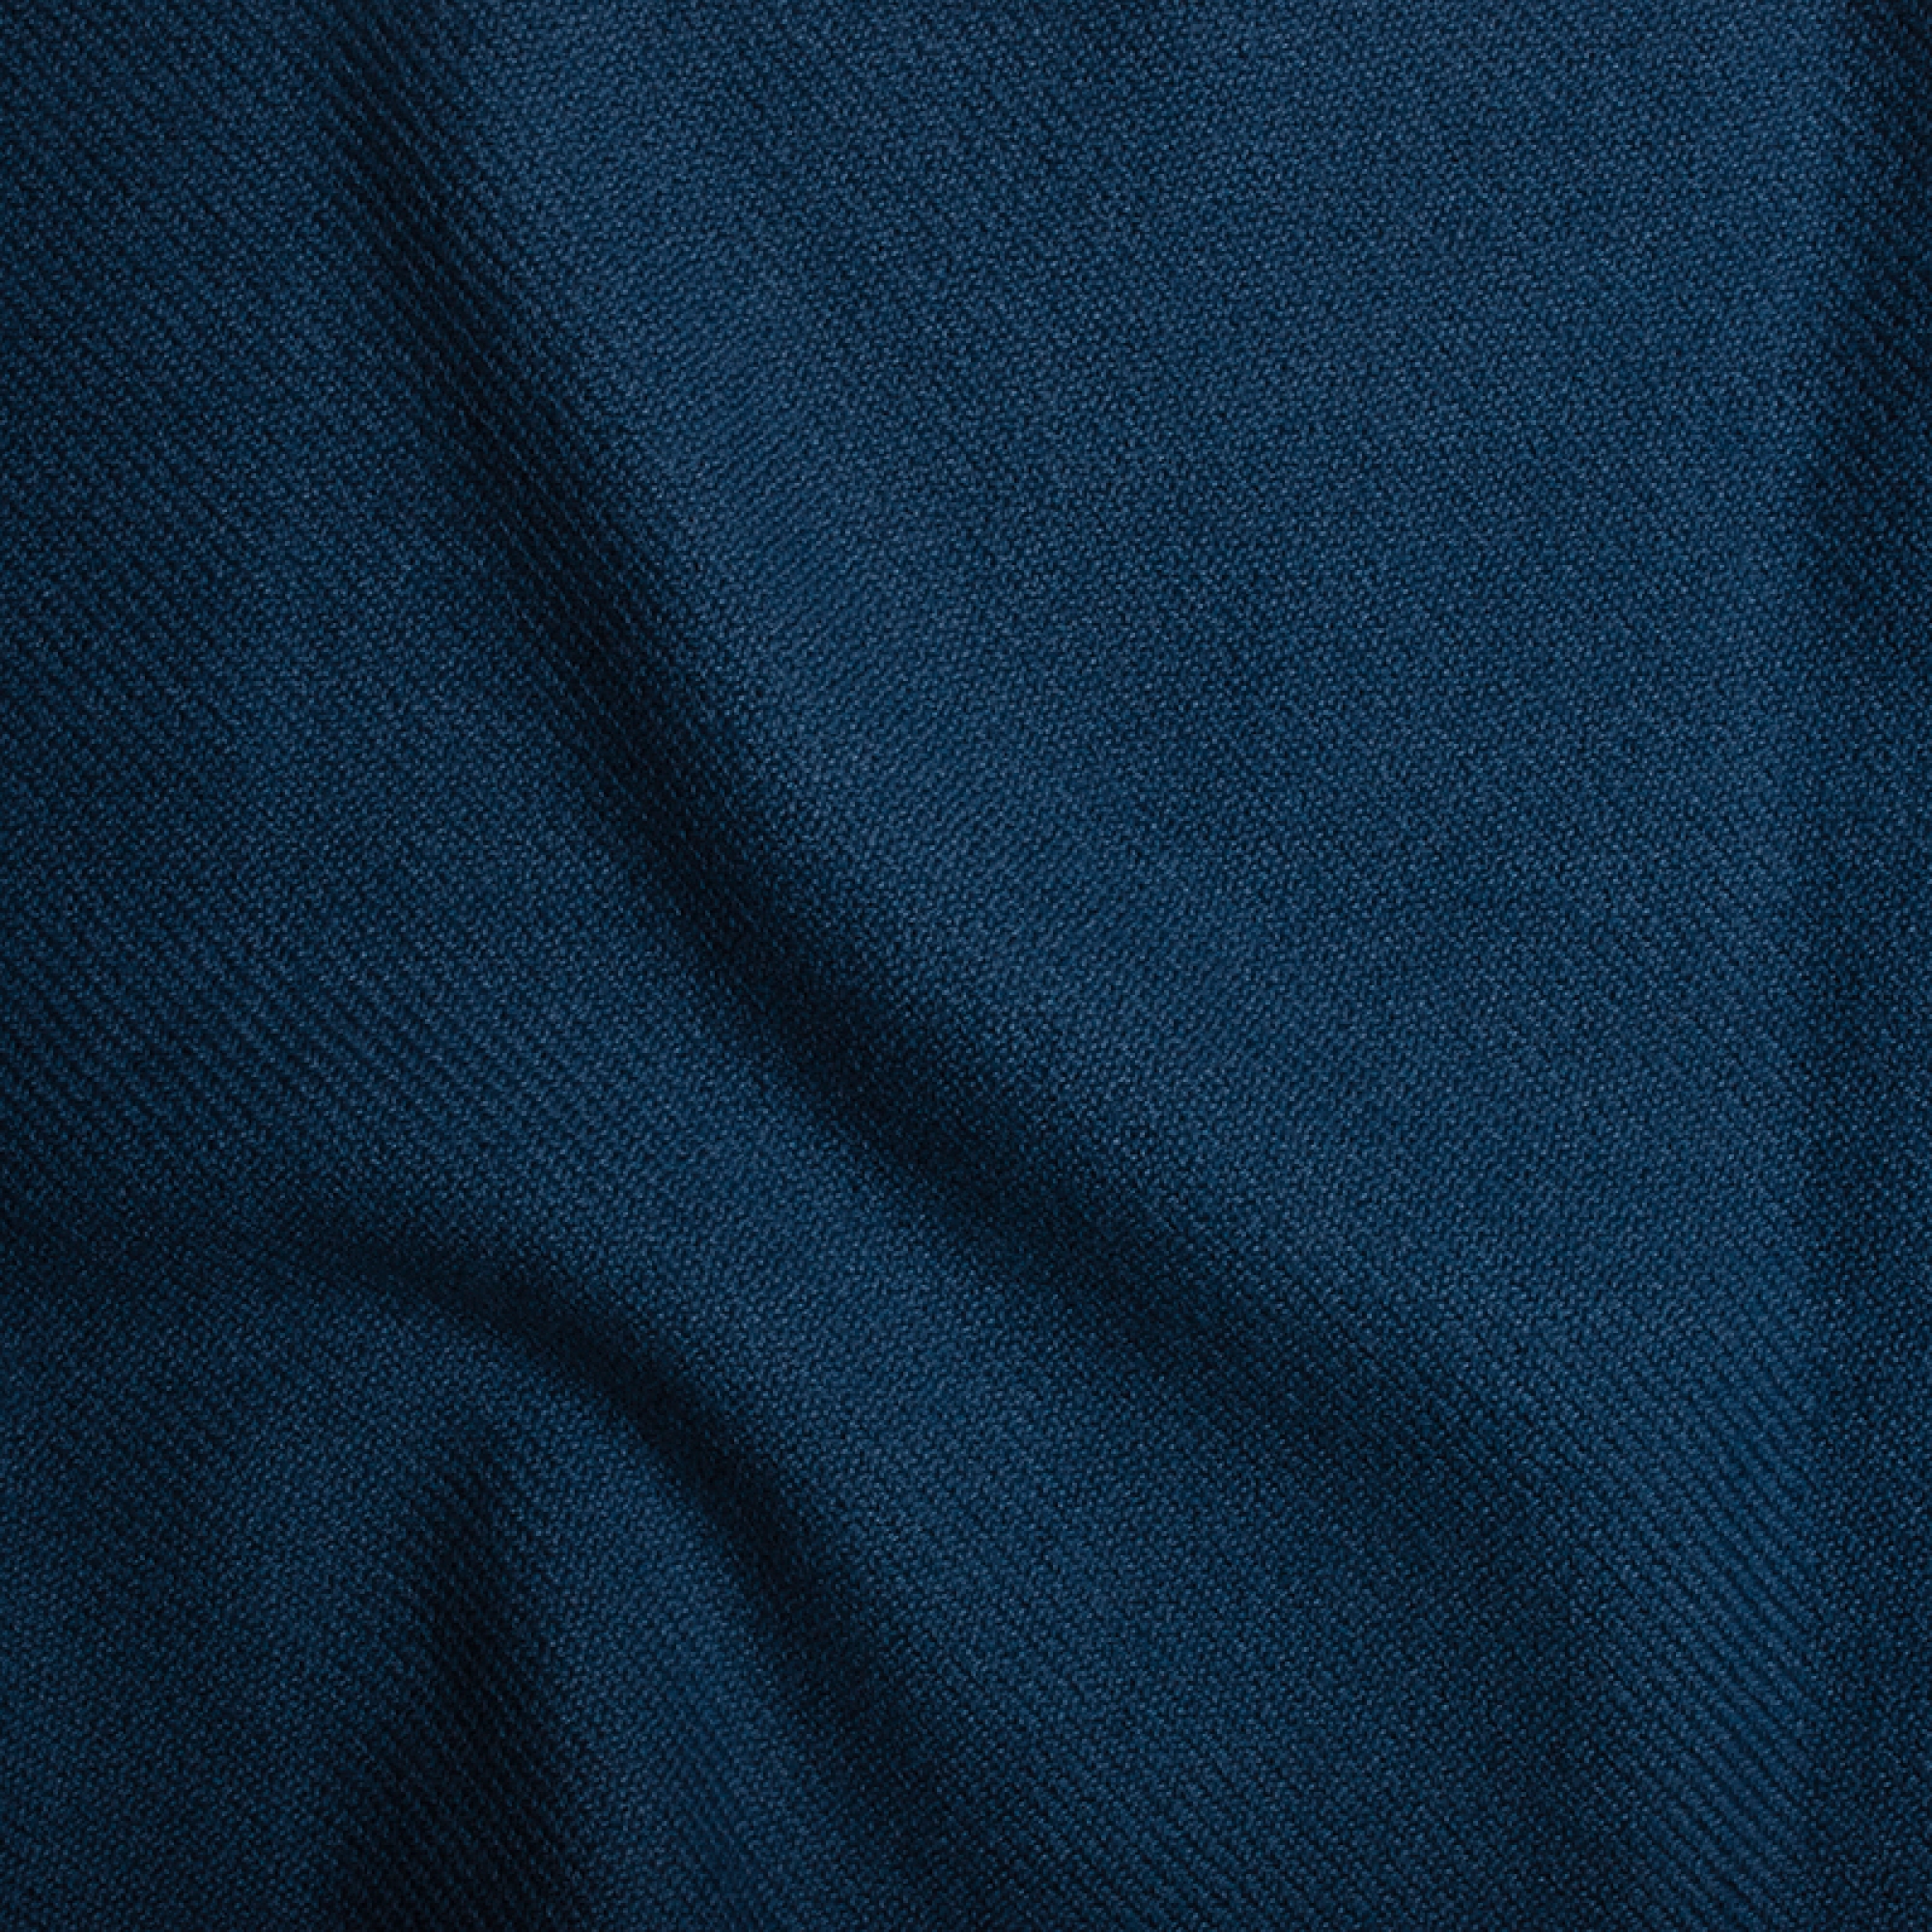 Cashmere accessories blanket toodoo plain s 140 x 200 dark blue 140 x 200 cm